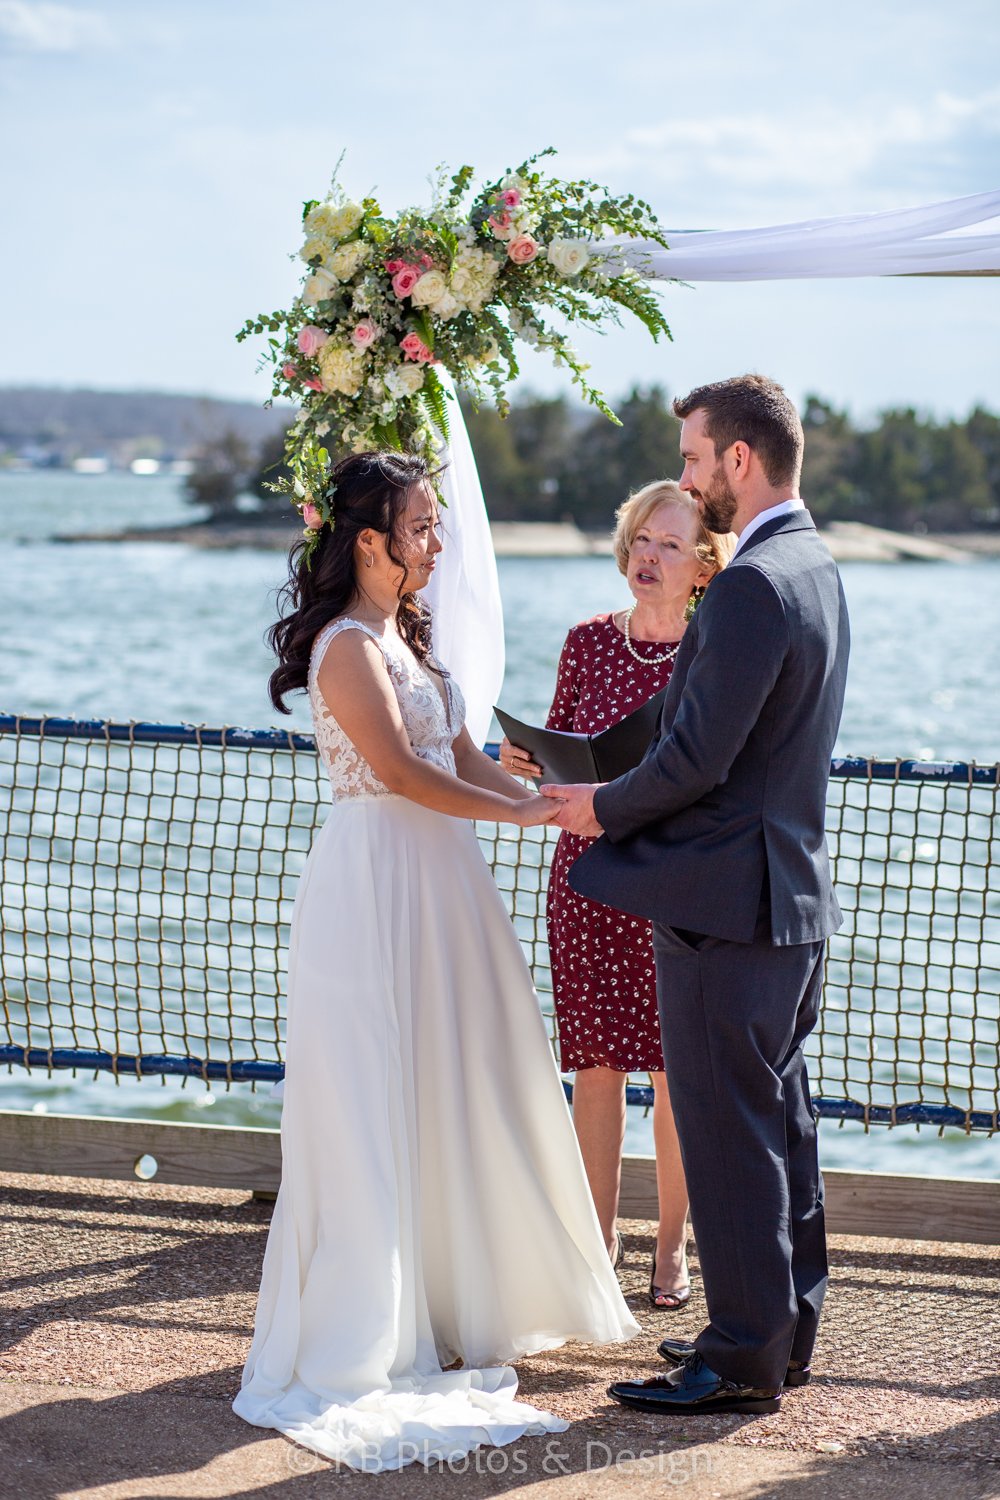 Wedding-Destination-Photography-Lake-of-the-Ozarks-Missouri-Wade-Natsuko-Jefferson-City-bride-groom-Lodge-of-Four-Seasons-wedding-photographer-KB-Photos-and-Design-21.jpg